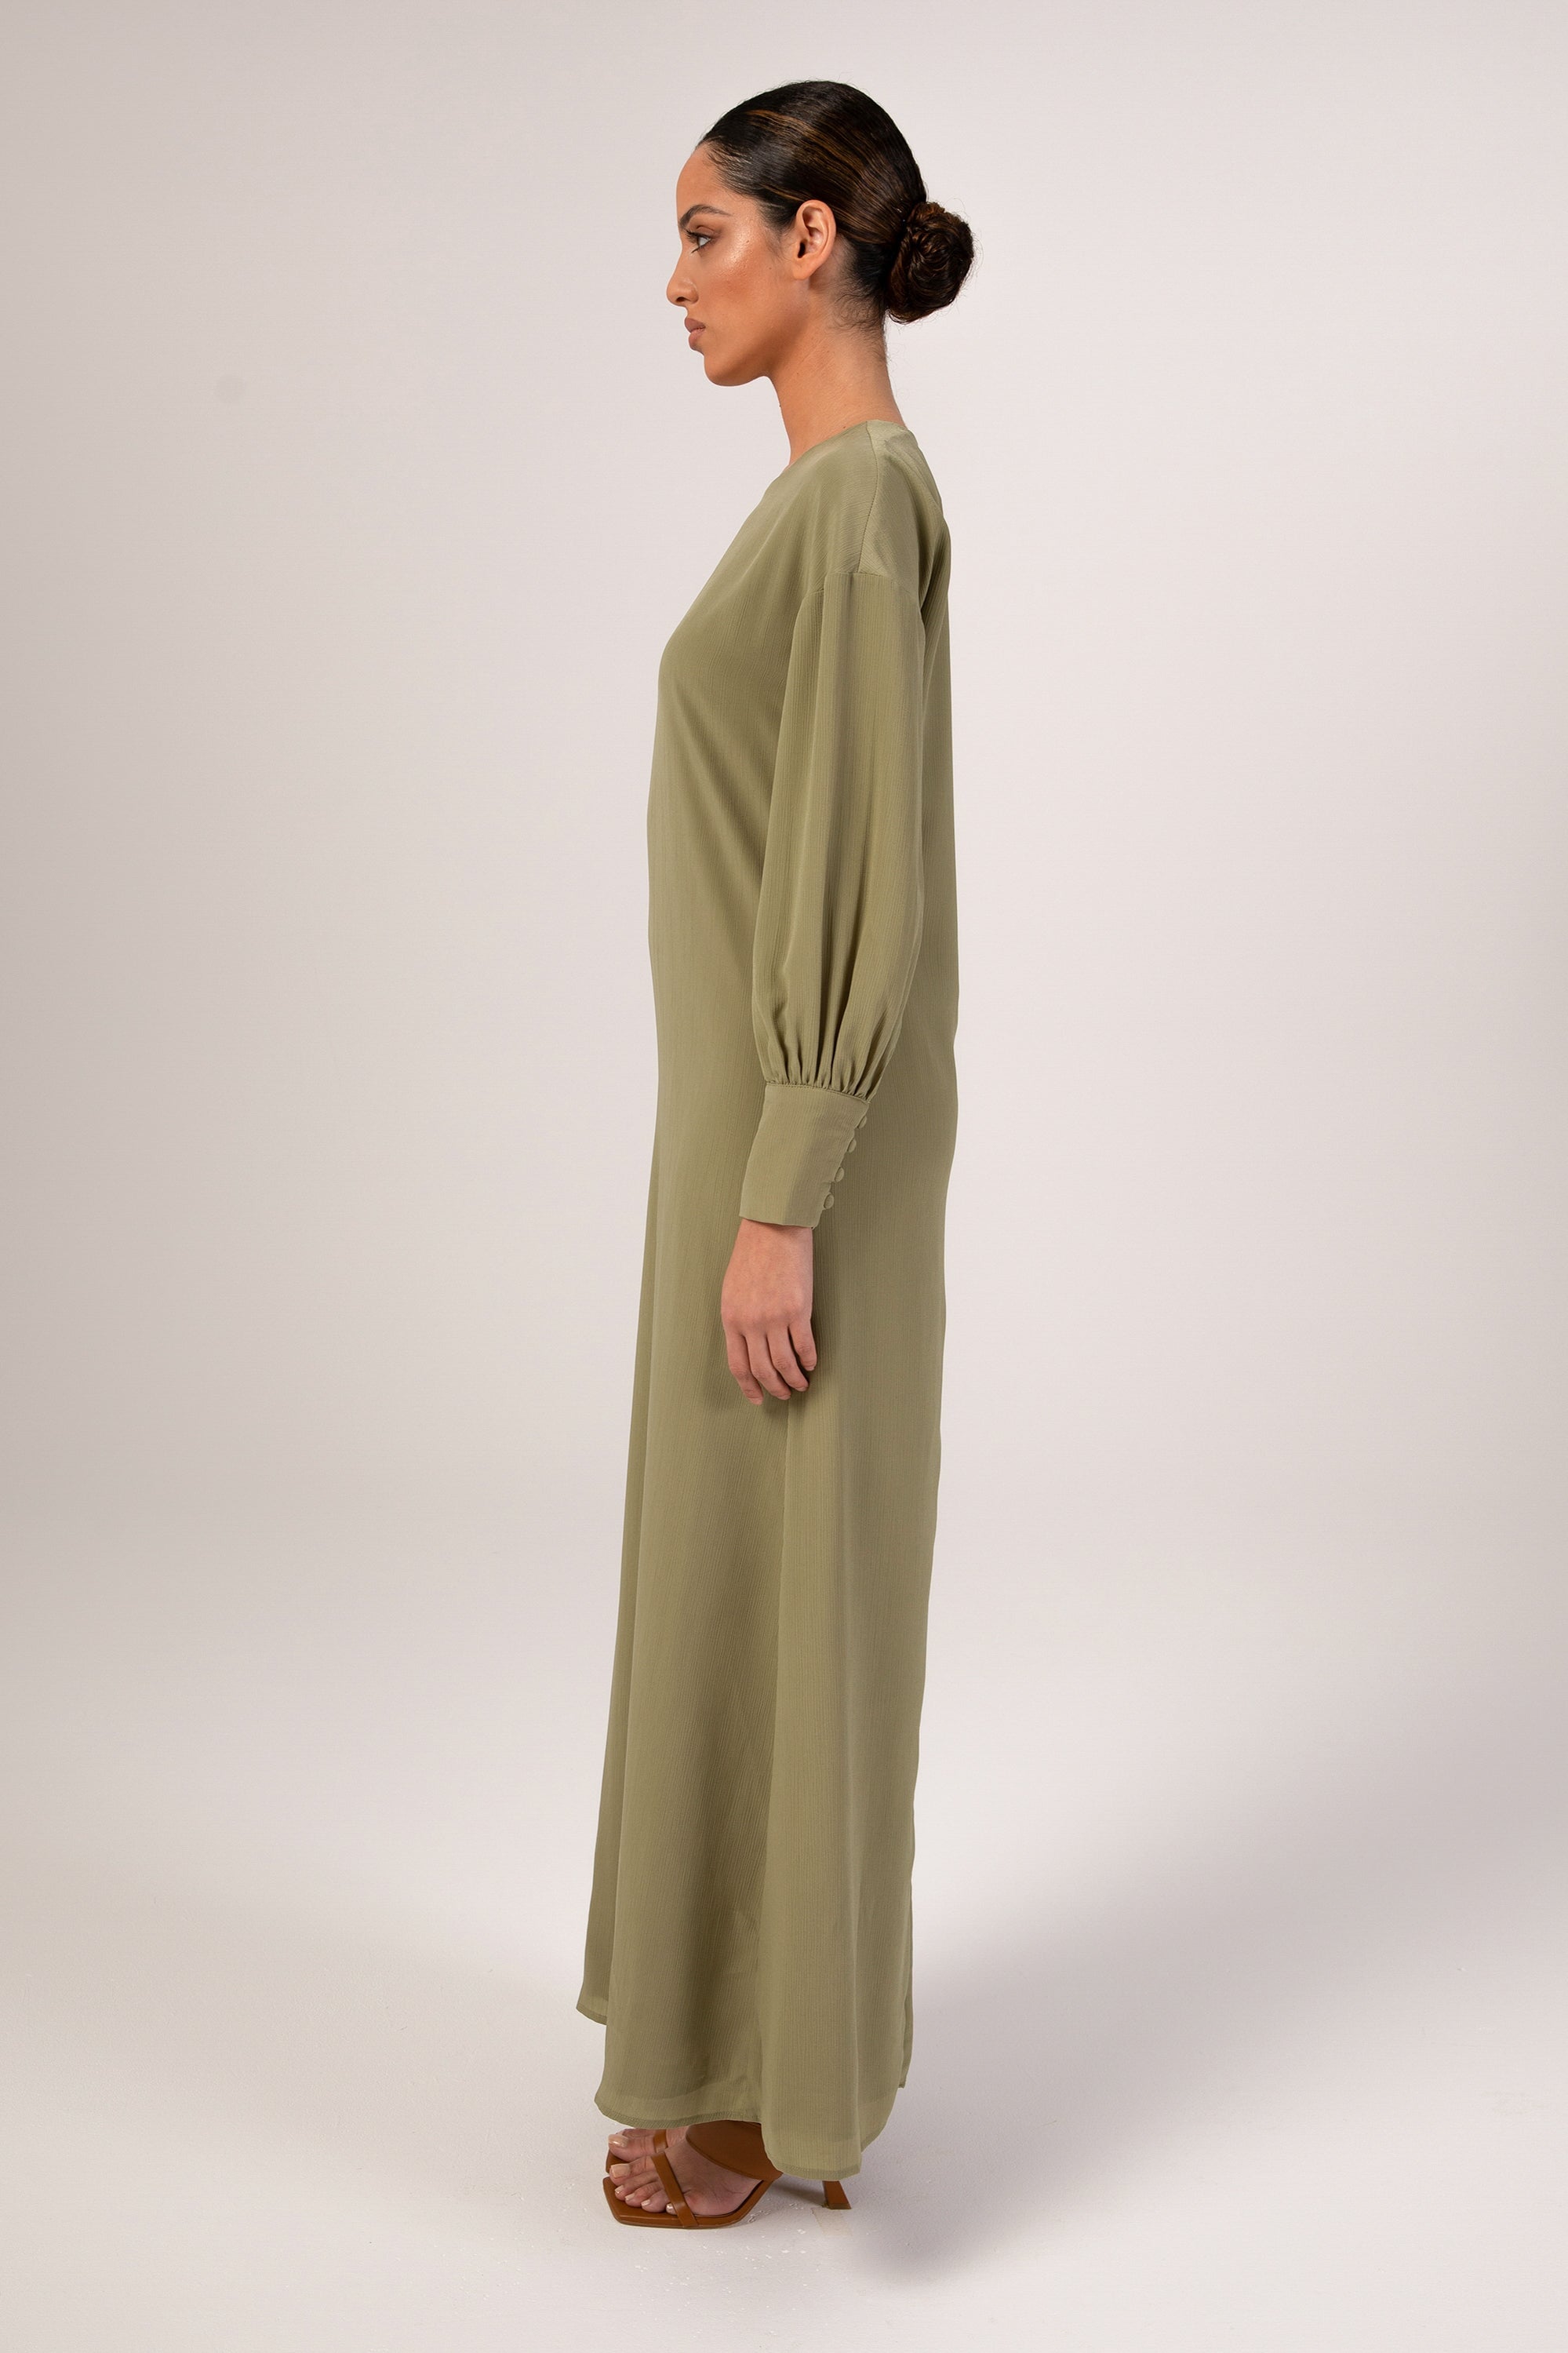 Madina Textured Maxi Dress - Avocado Veiled 